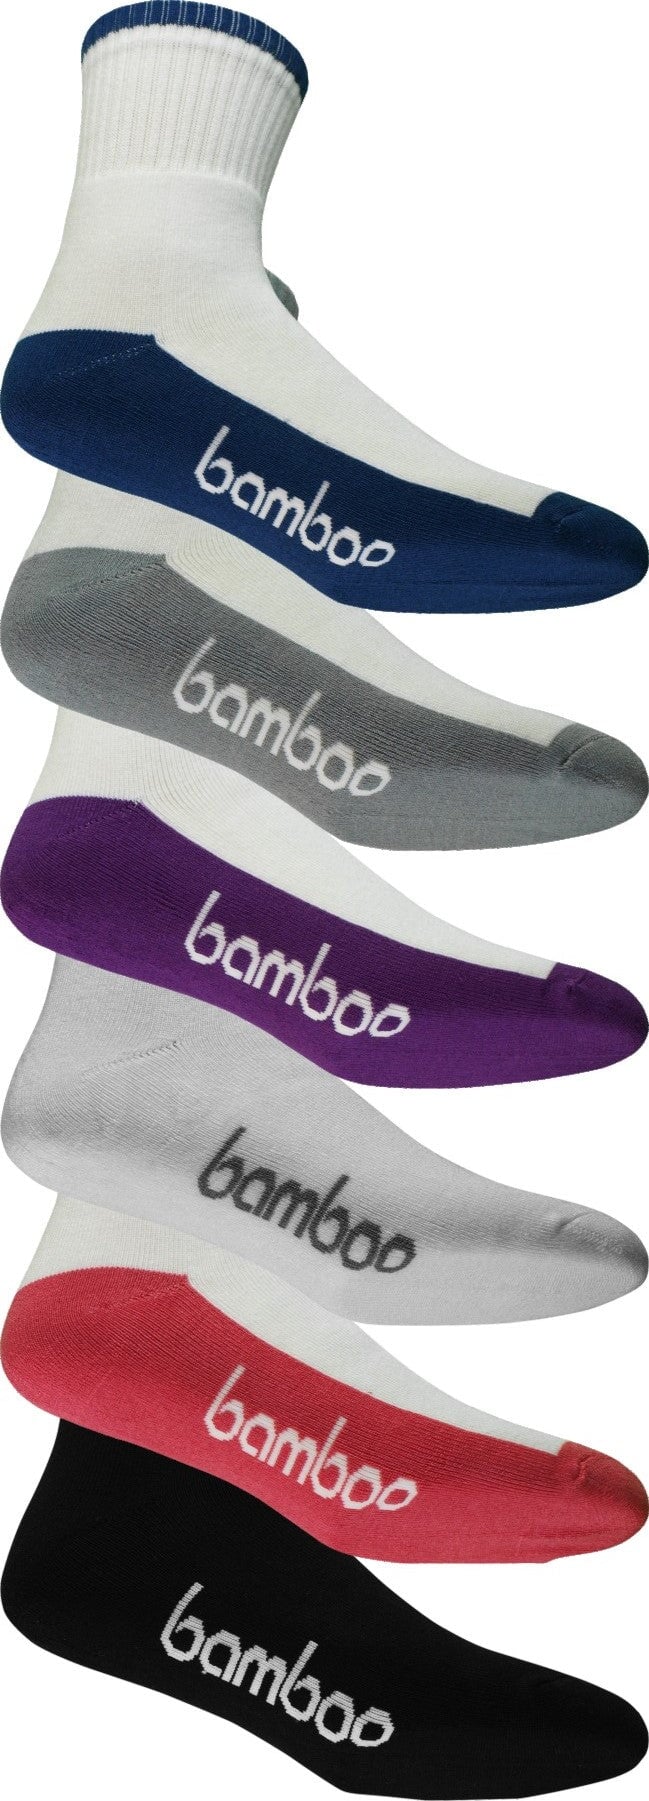 Bamboo Sports Crew Socks Socks Bamboo Textiles 